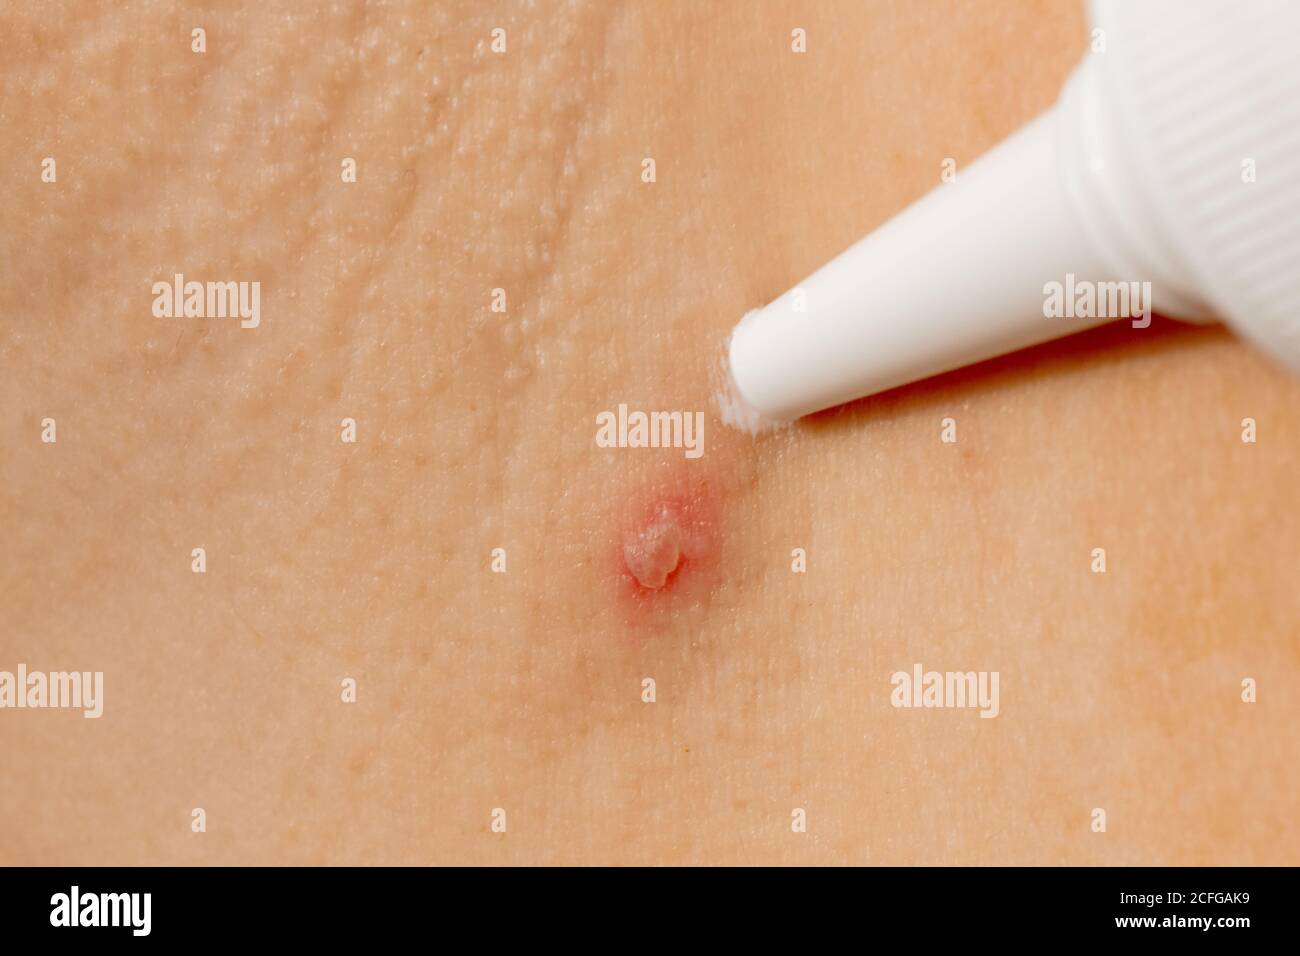 Woman applying cream on skin body ill with chickenpox Stock Photo